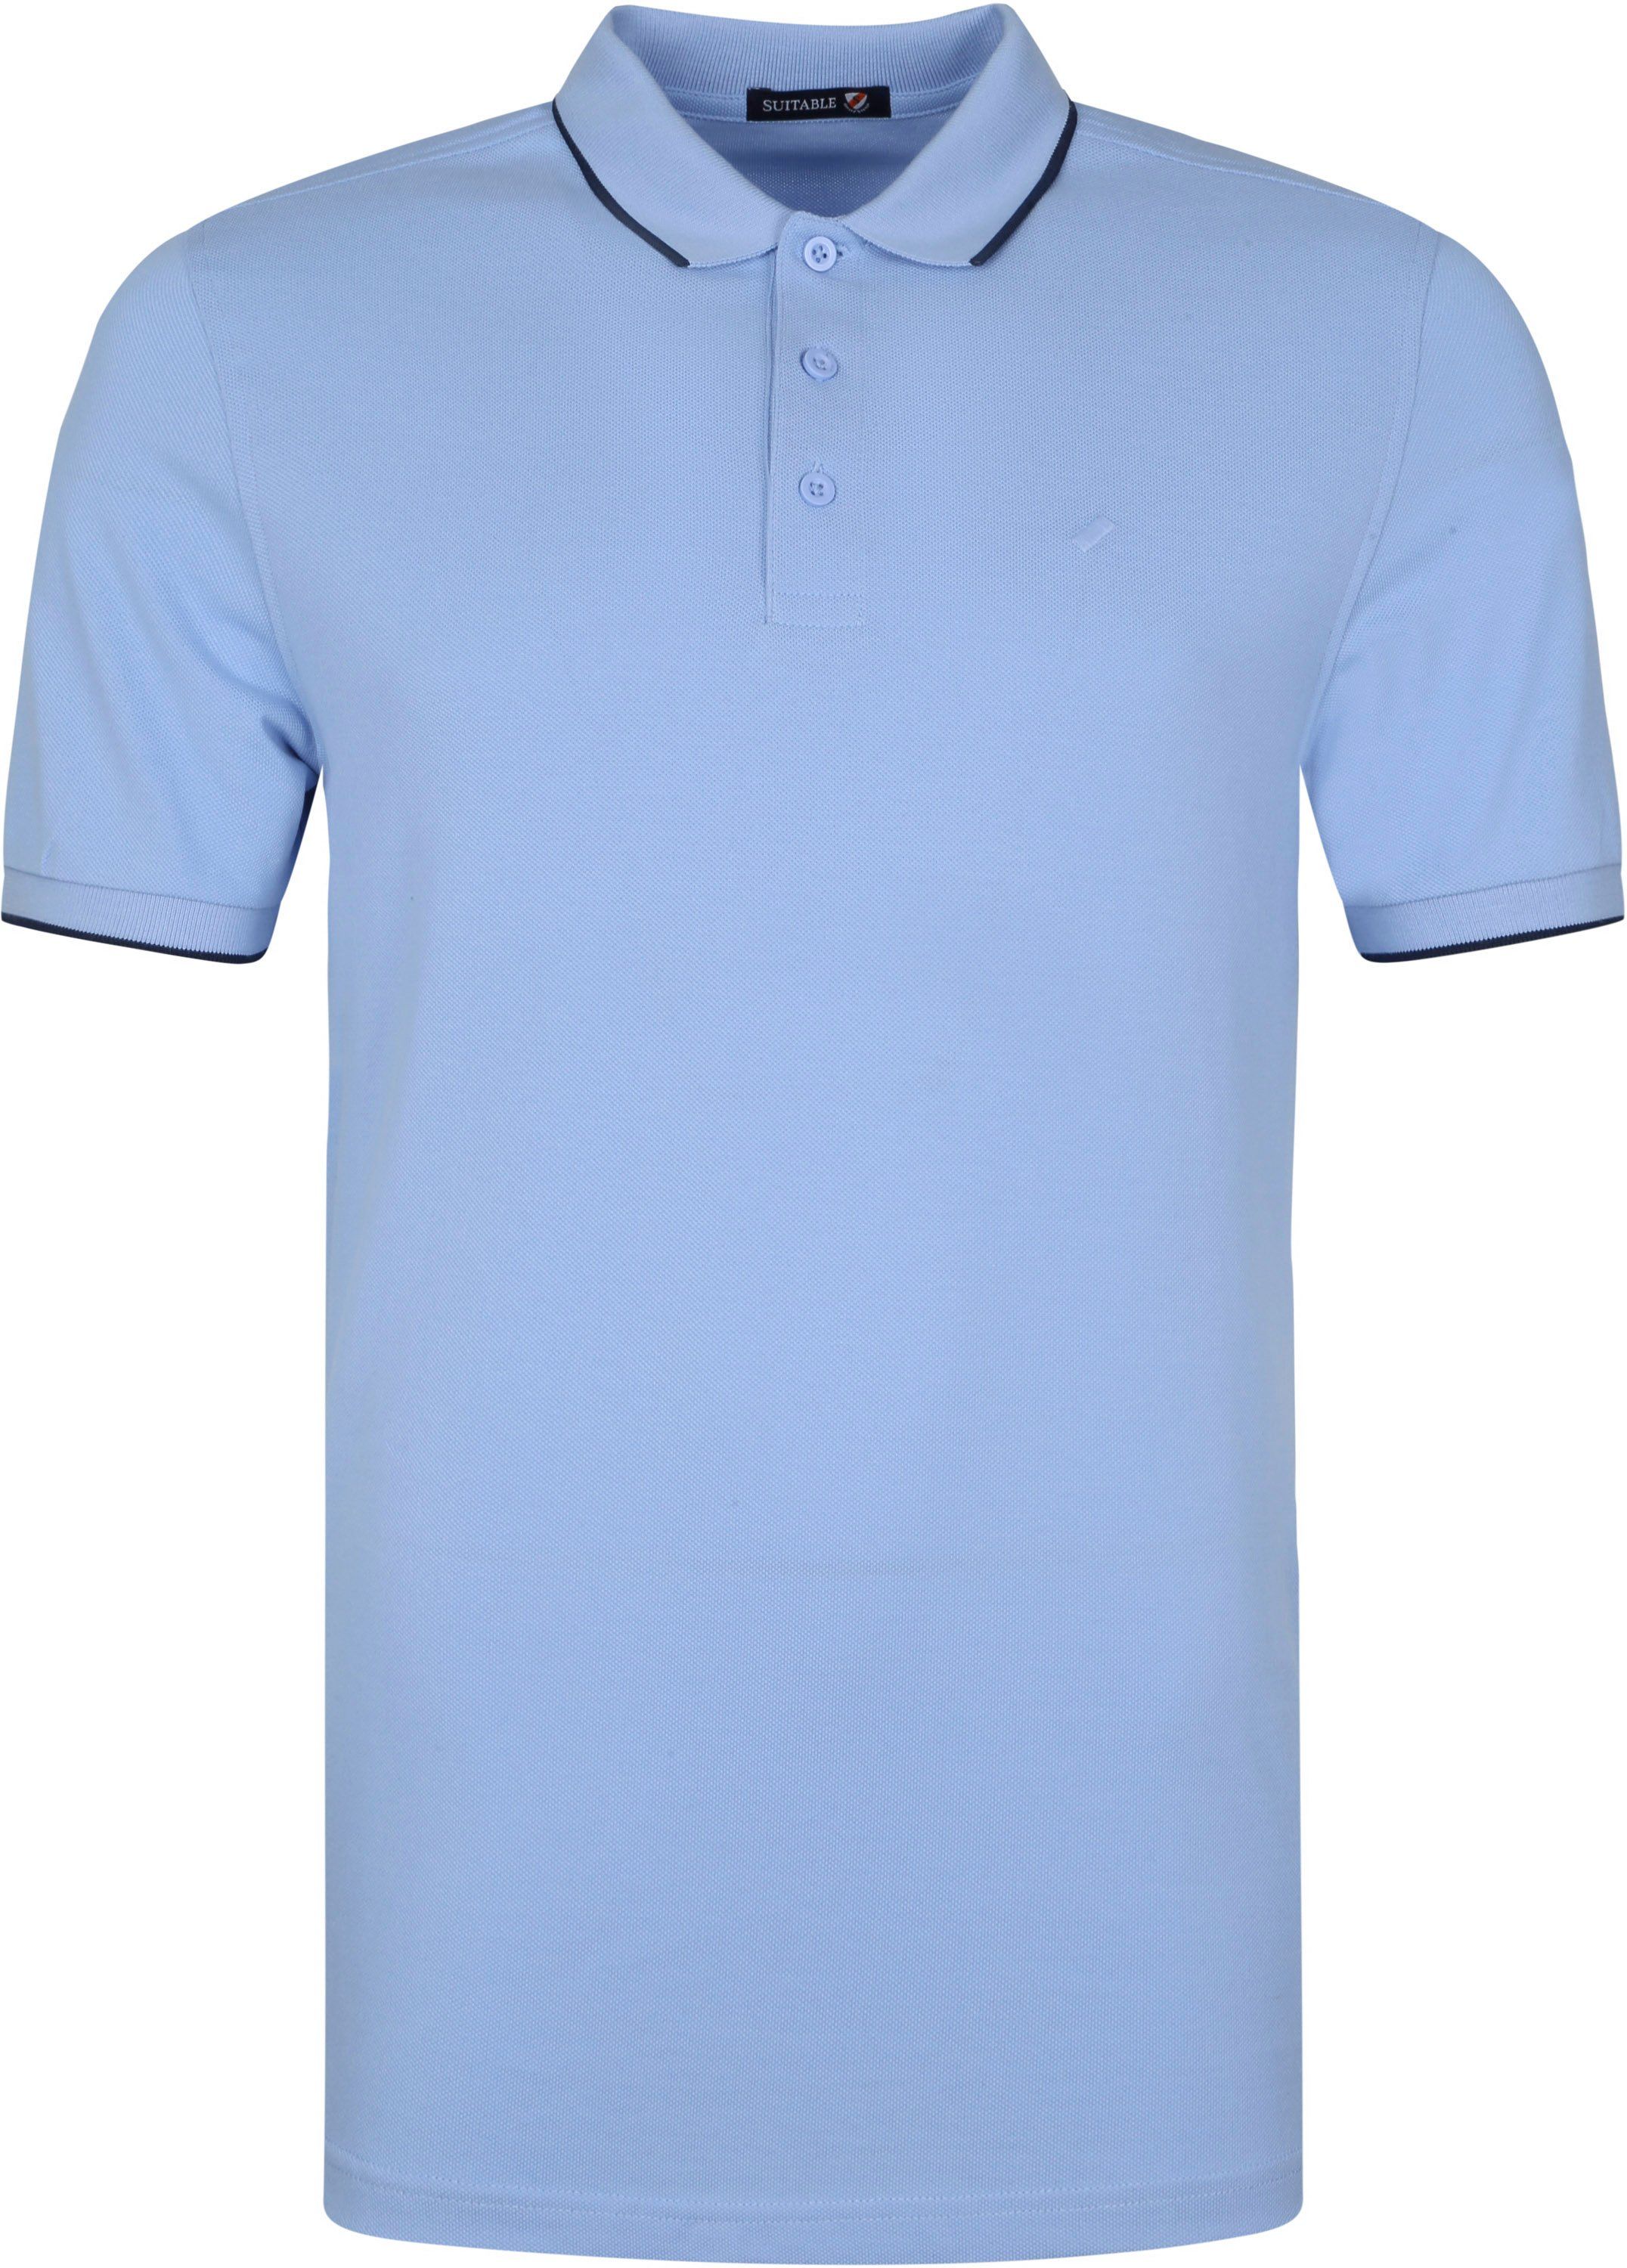 Suitable Poloshirt Tip Ferry Light Light blue Blue size L